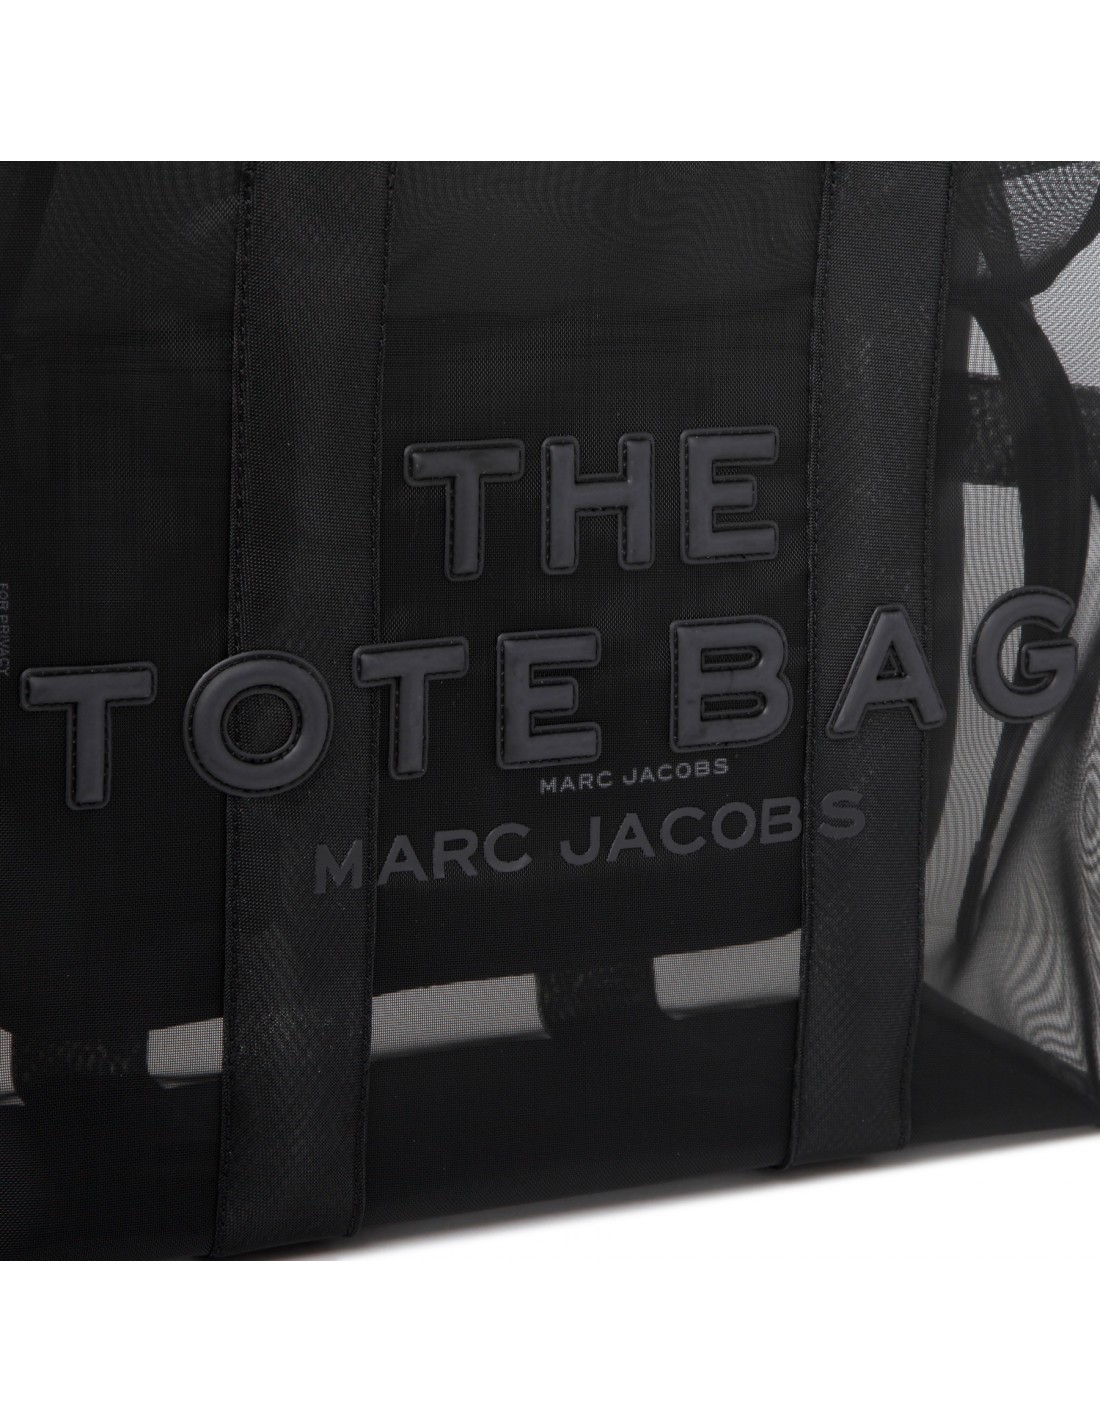 The Mesh Large tote bag